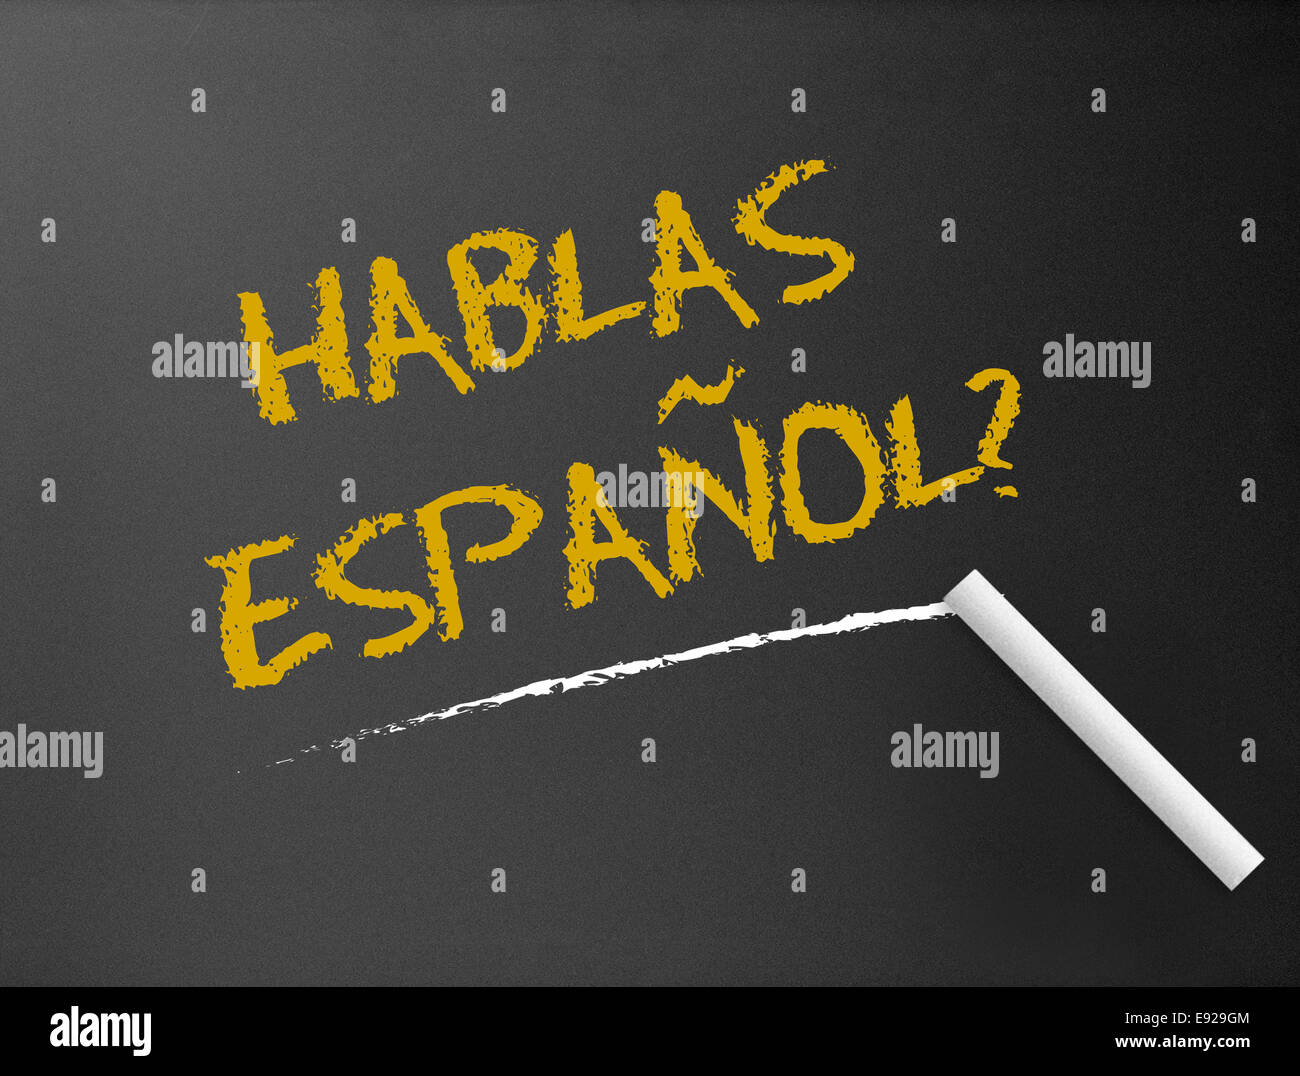 Chalkboard - Hablas Espanol Stock Photo